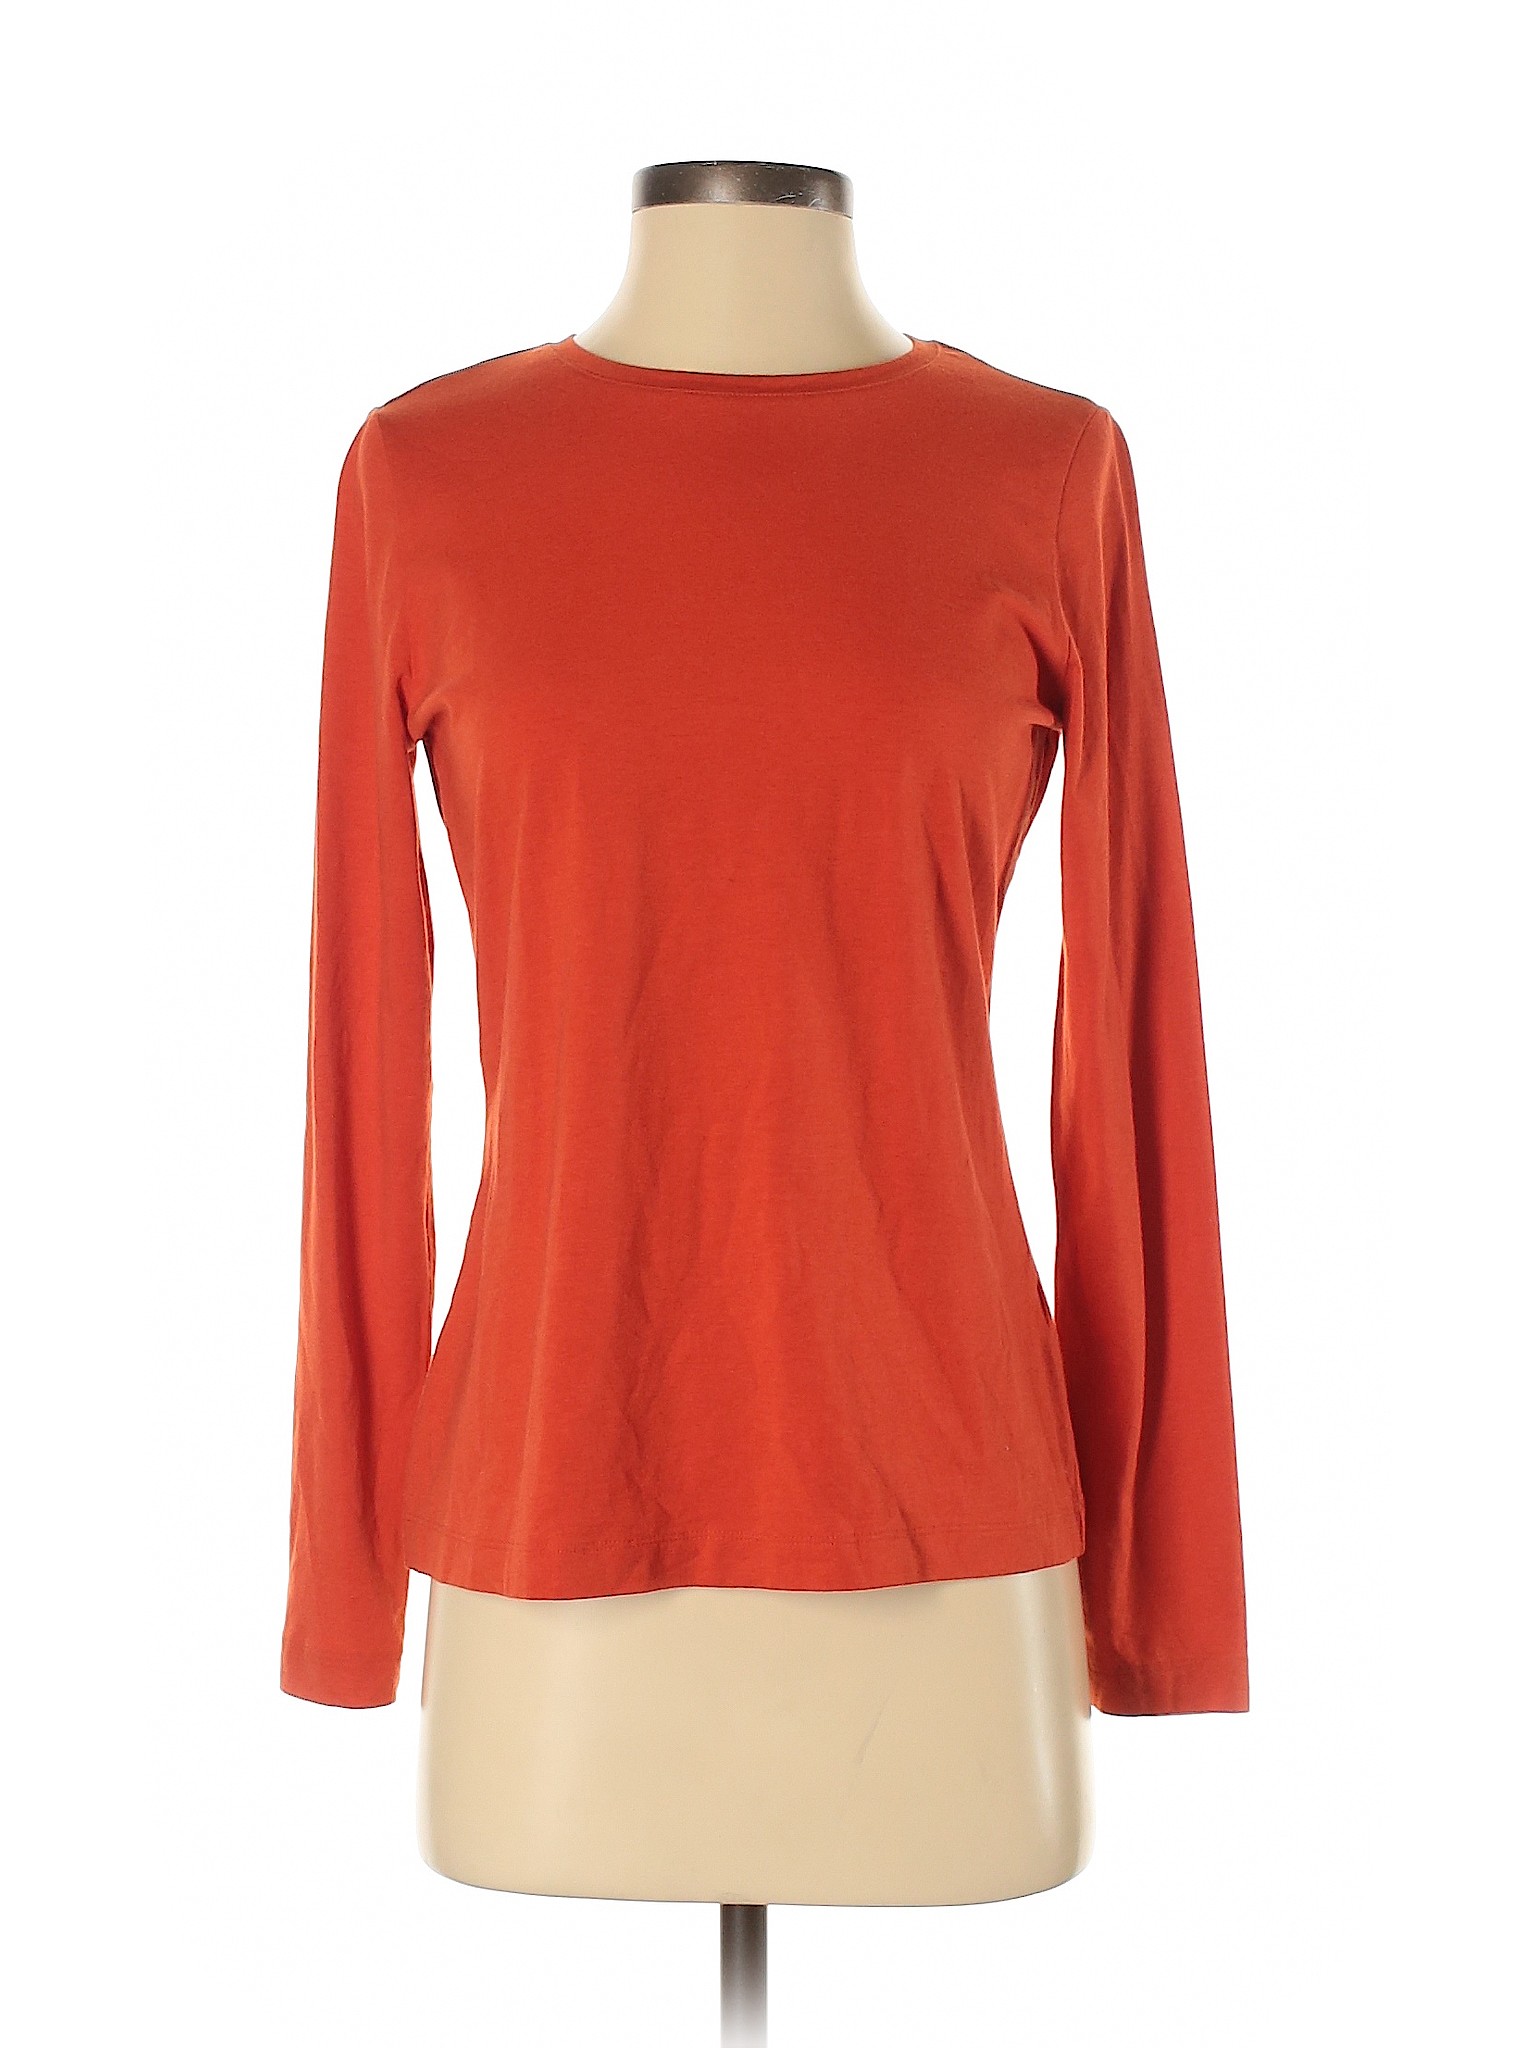 Lands' End Women Orange Long Sleeve T-Shirt S | eBay